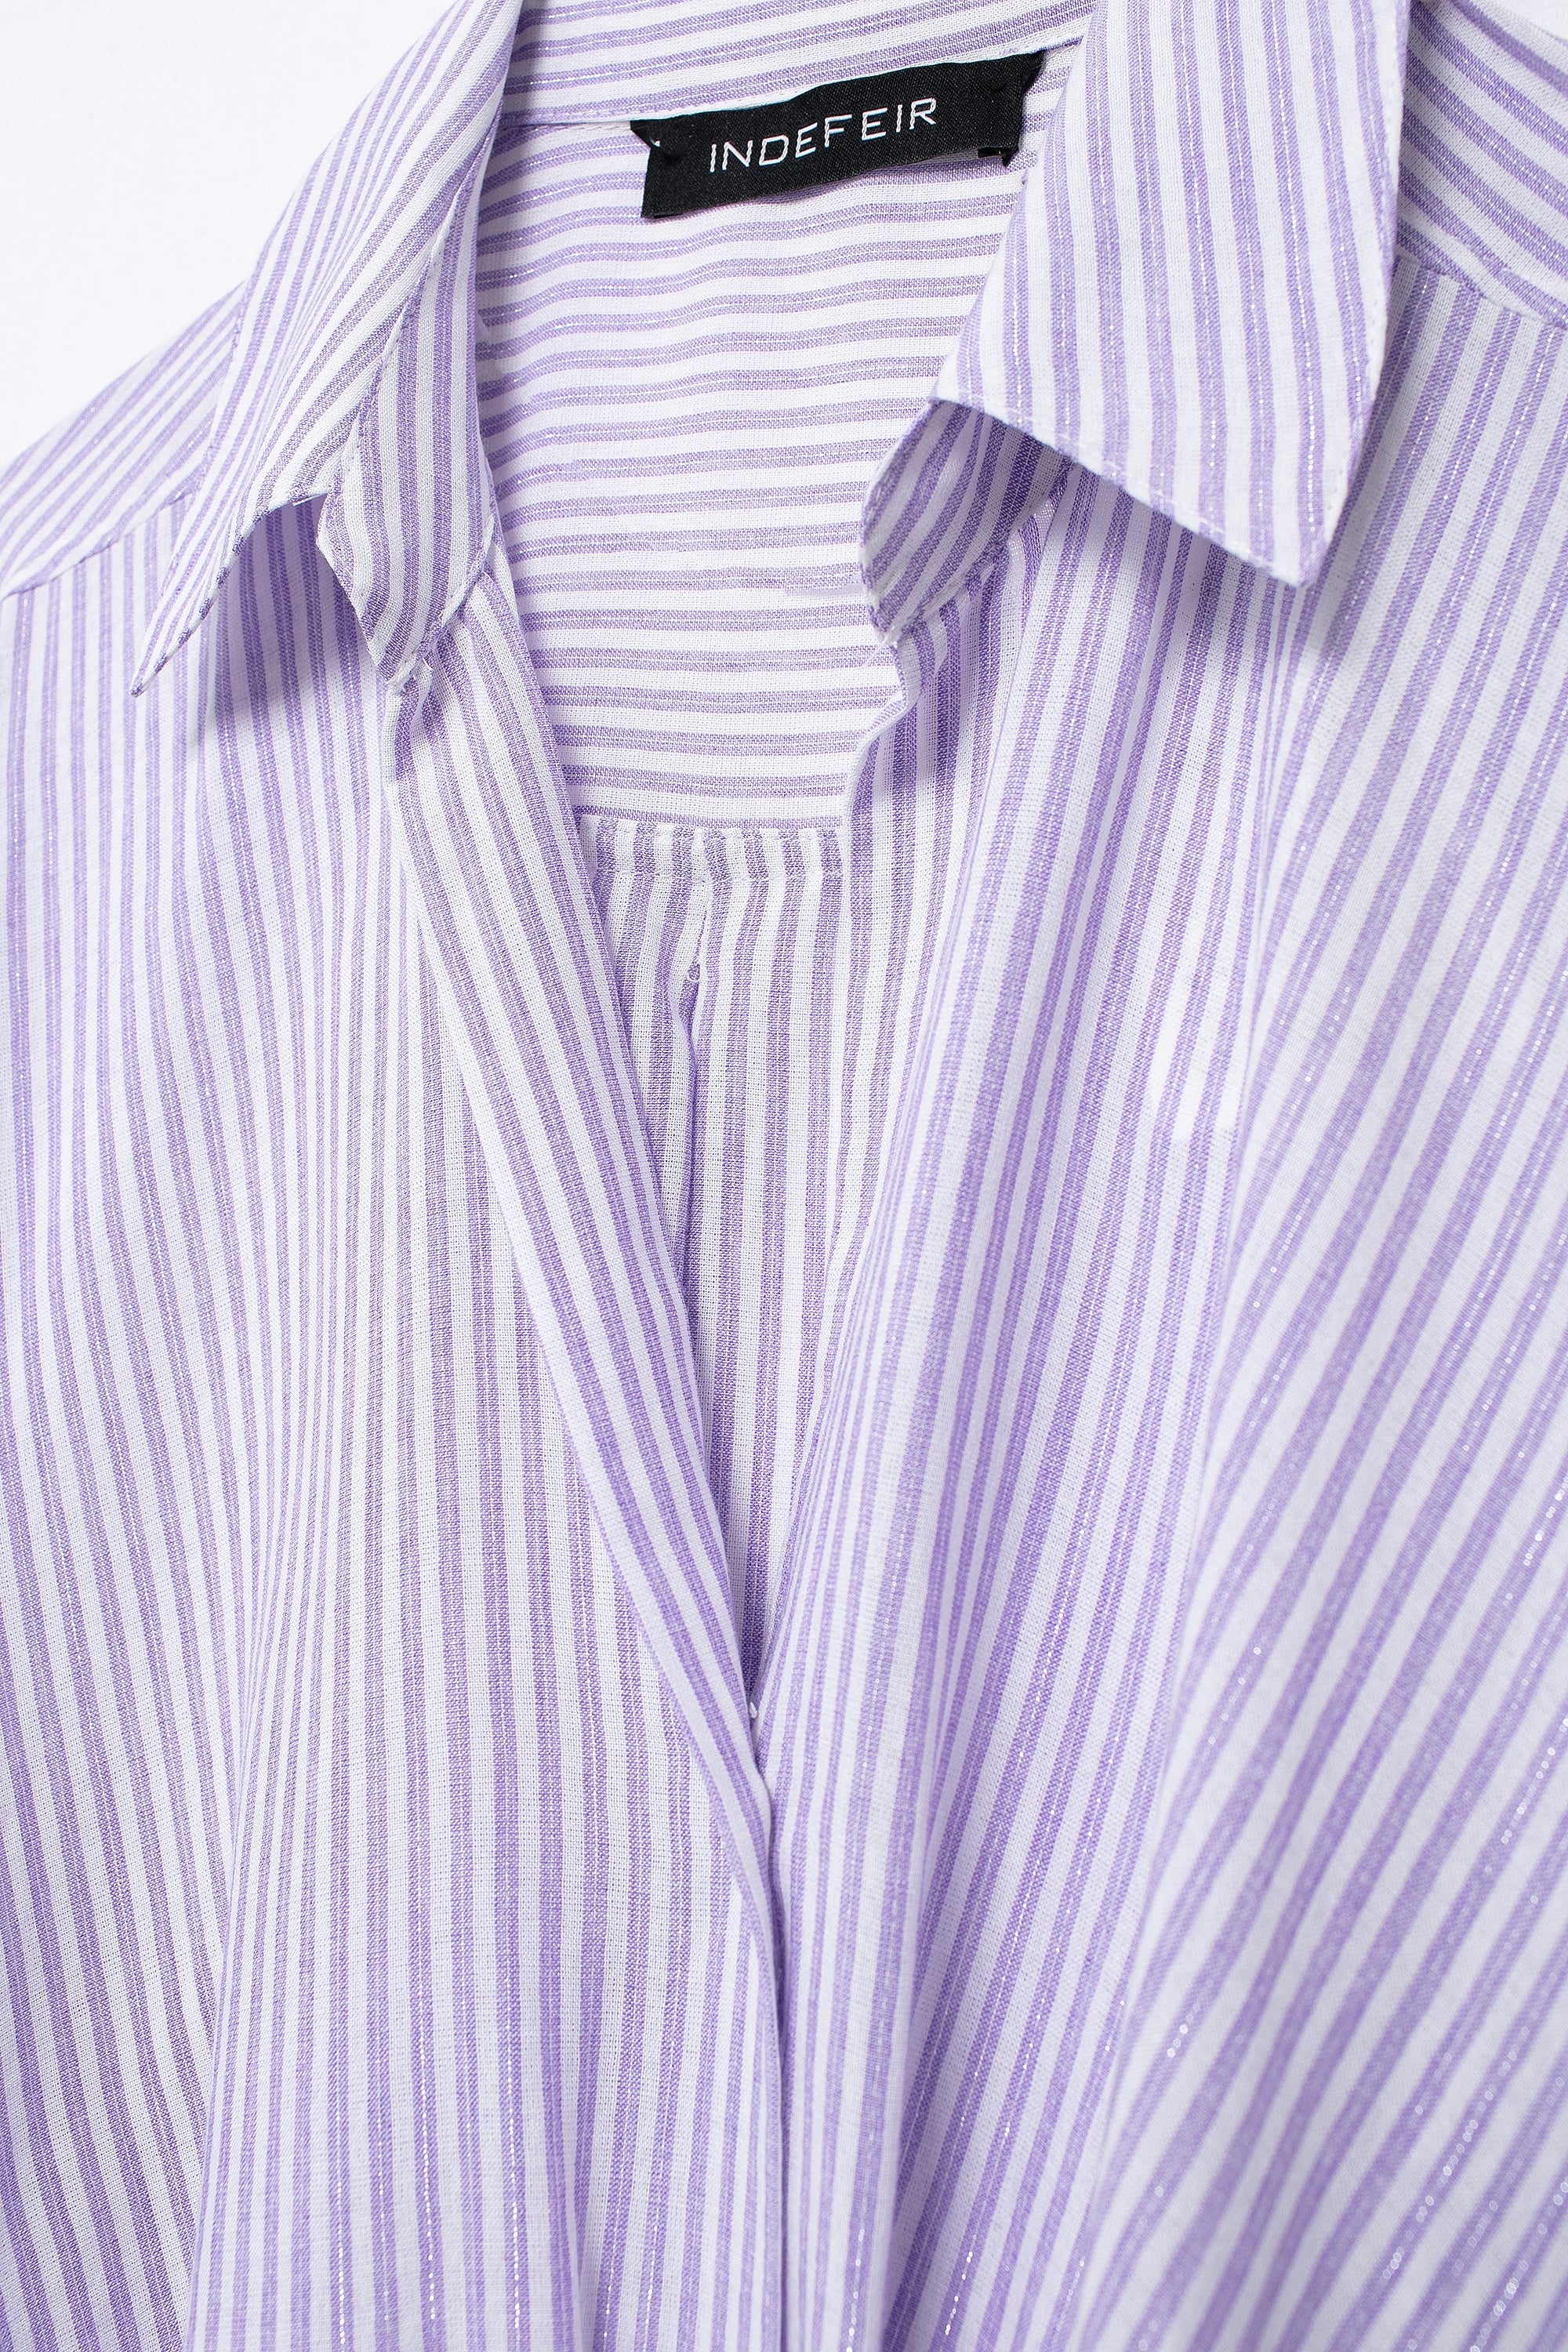 Spring Street Casual Loose Linen Blended Short Striped Shirt